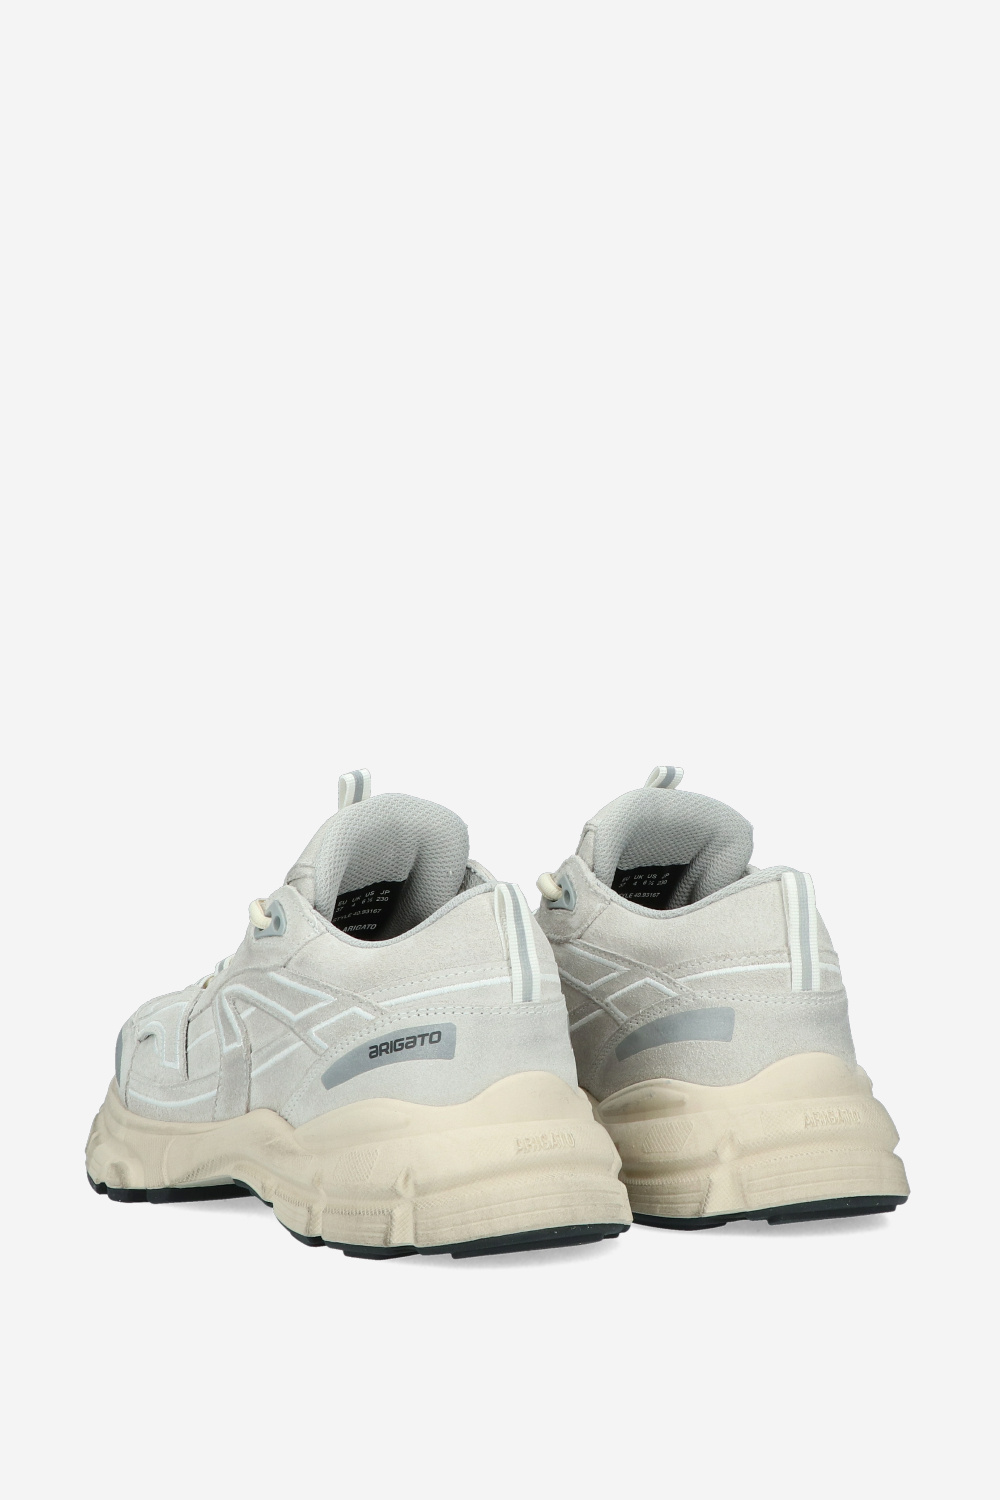 Axel Arigato Sneakers Grey